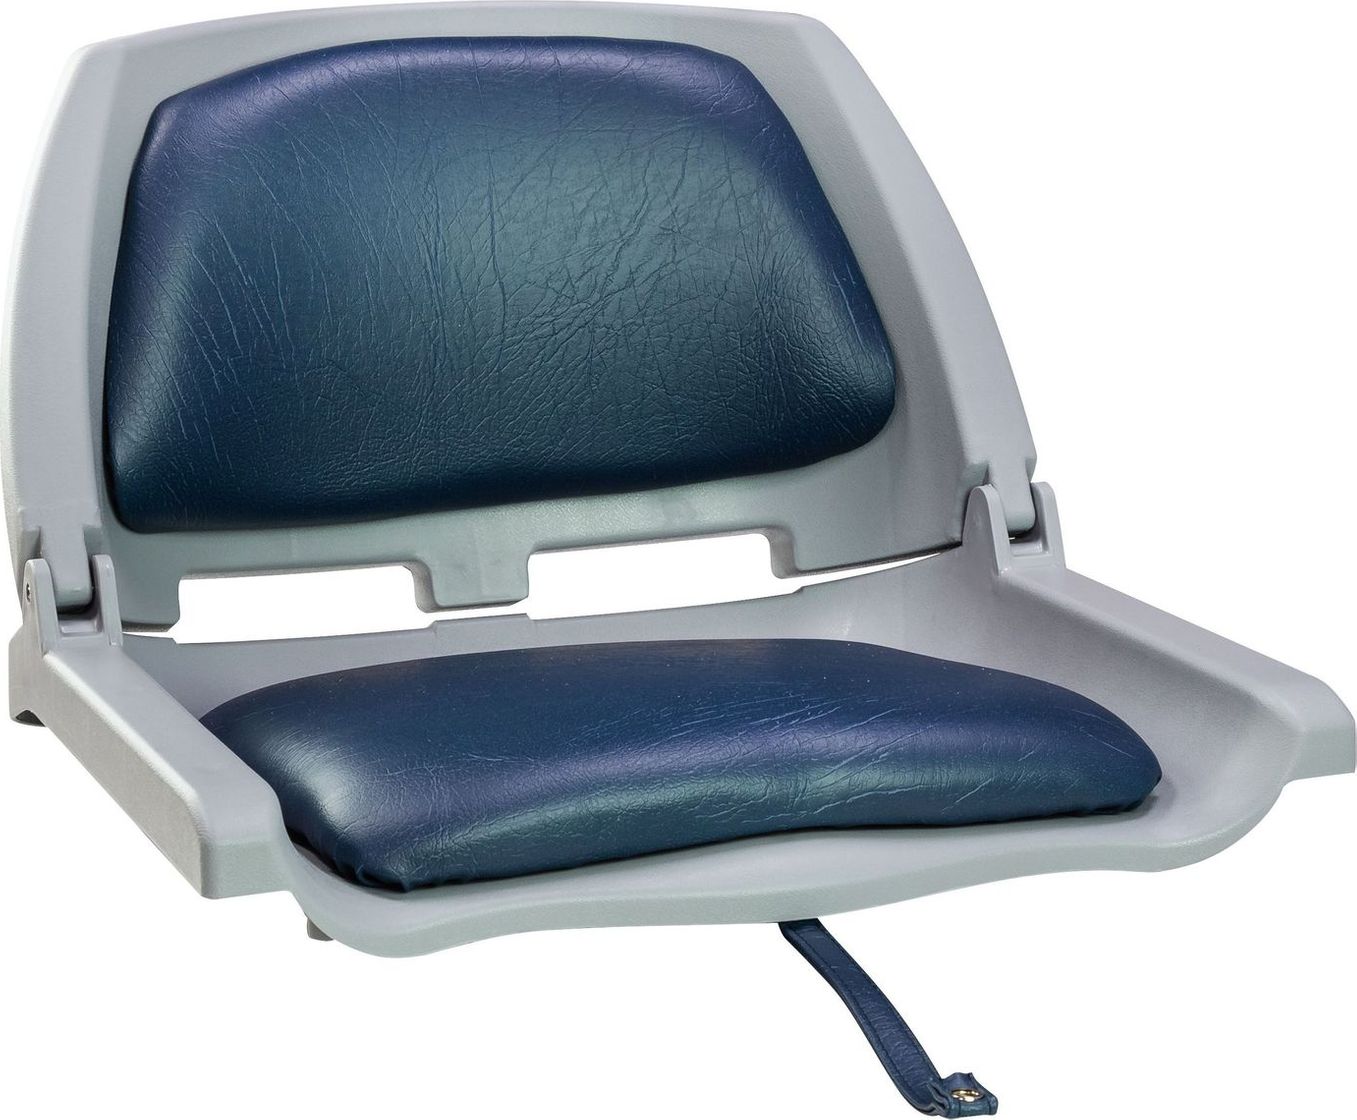 Кресло складное мягкое TRAVELER, цвет серый/синий (упаковка из 2 шт.) 1061112C_pkg_2 кресло складное мягкое traveler обивка камуфляжная ткань duck blind упаковка из 2 шт 1061108c pkg 2